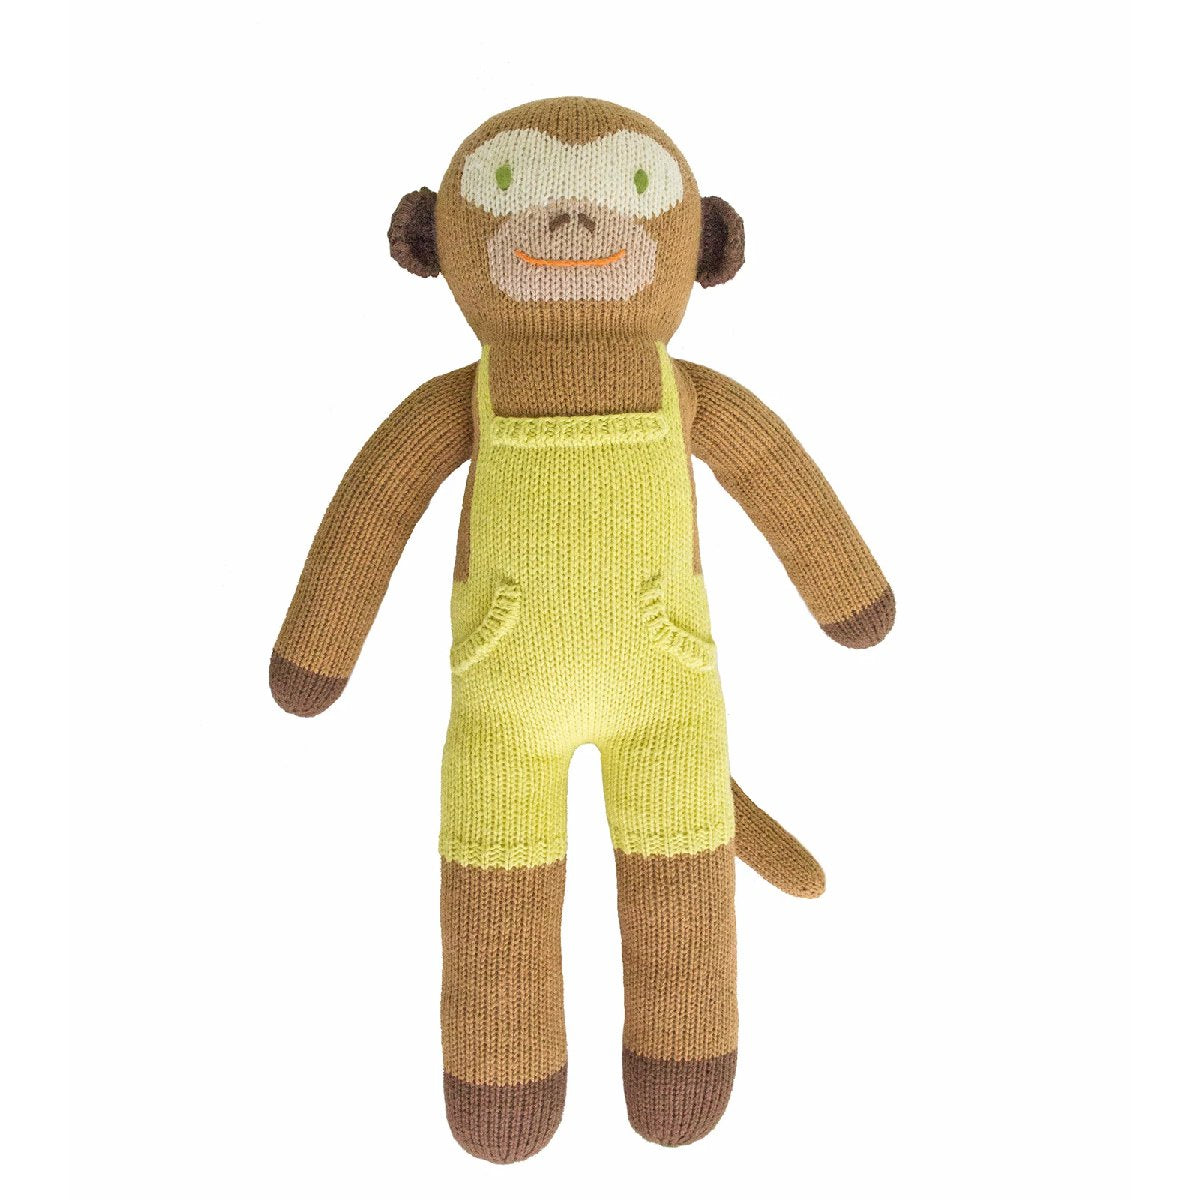 mondocherry - Blabla | "Yoyo the Monkey" kids cotton knit doll - large